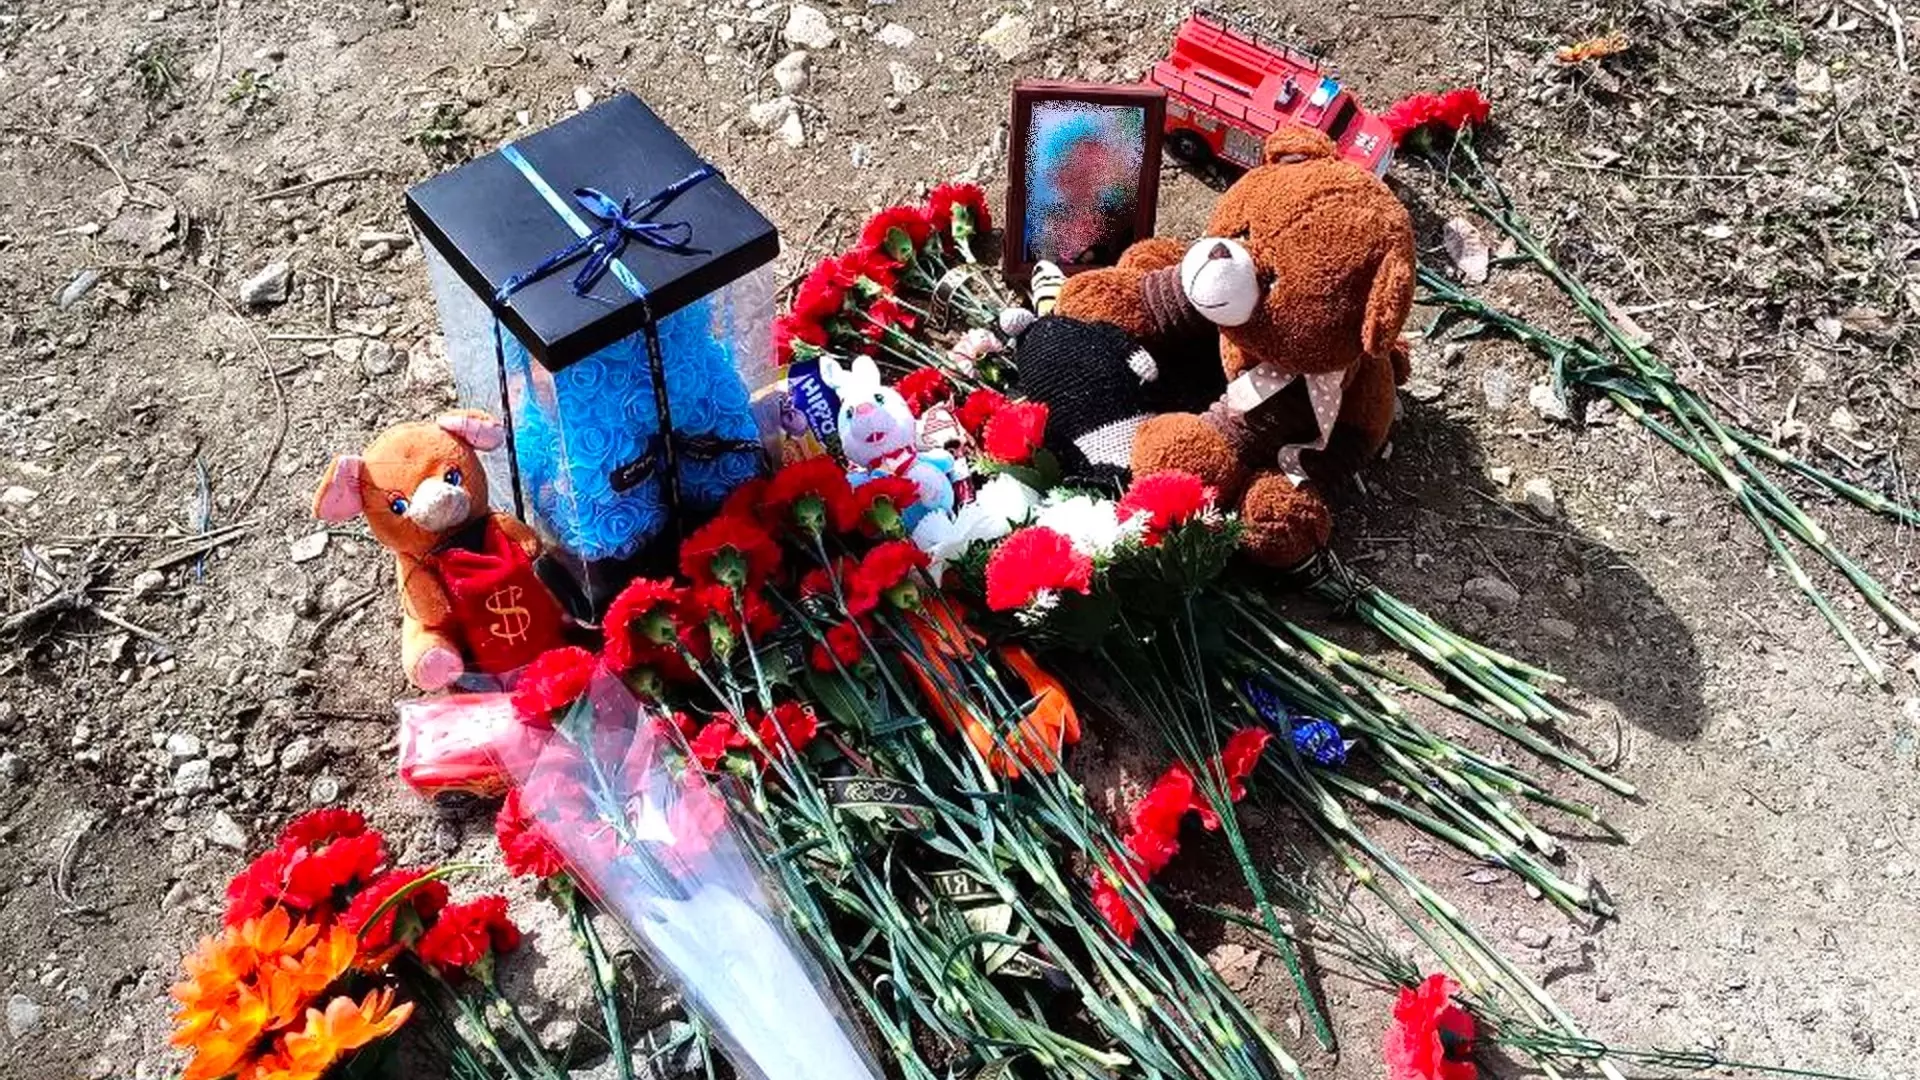 Цветы и игрушки на месте гибели мальчика